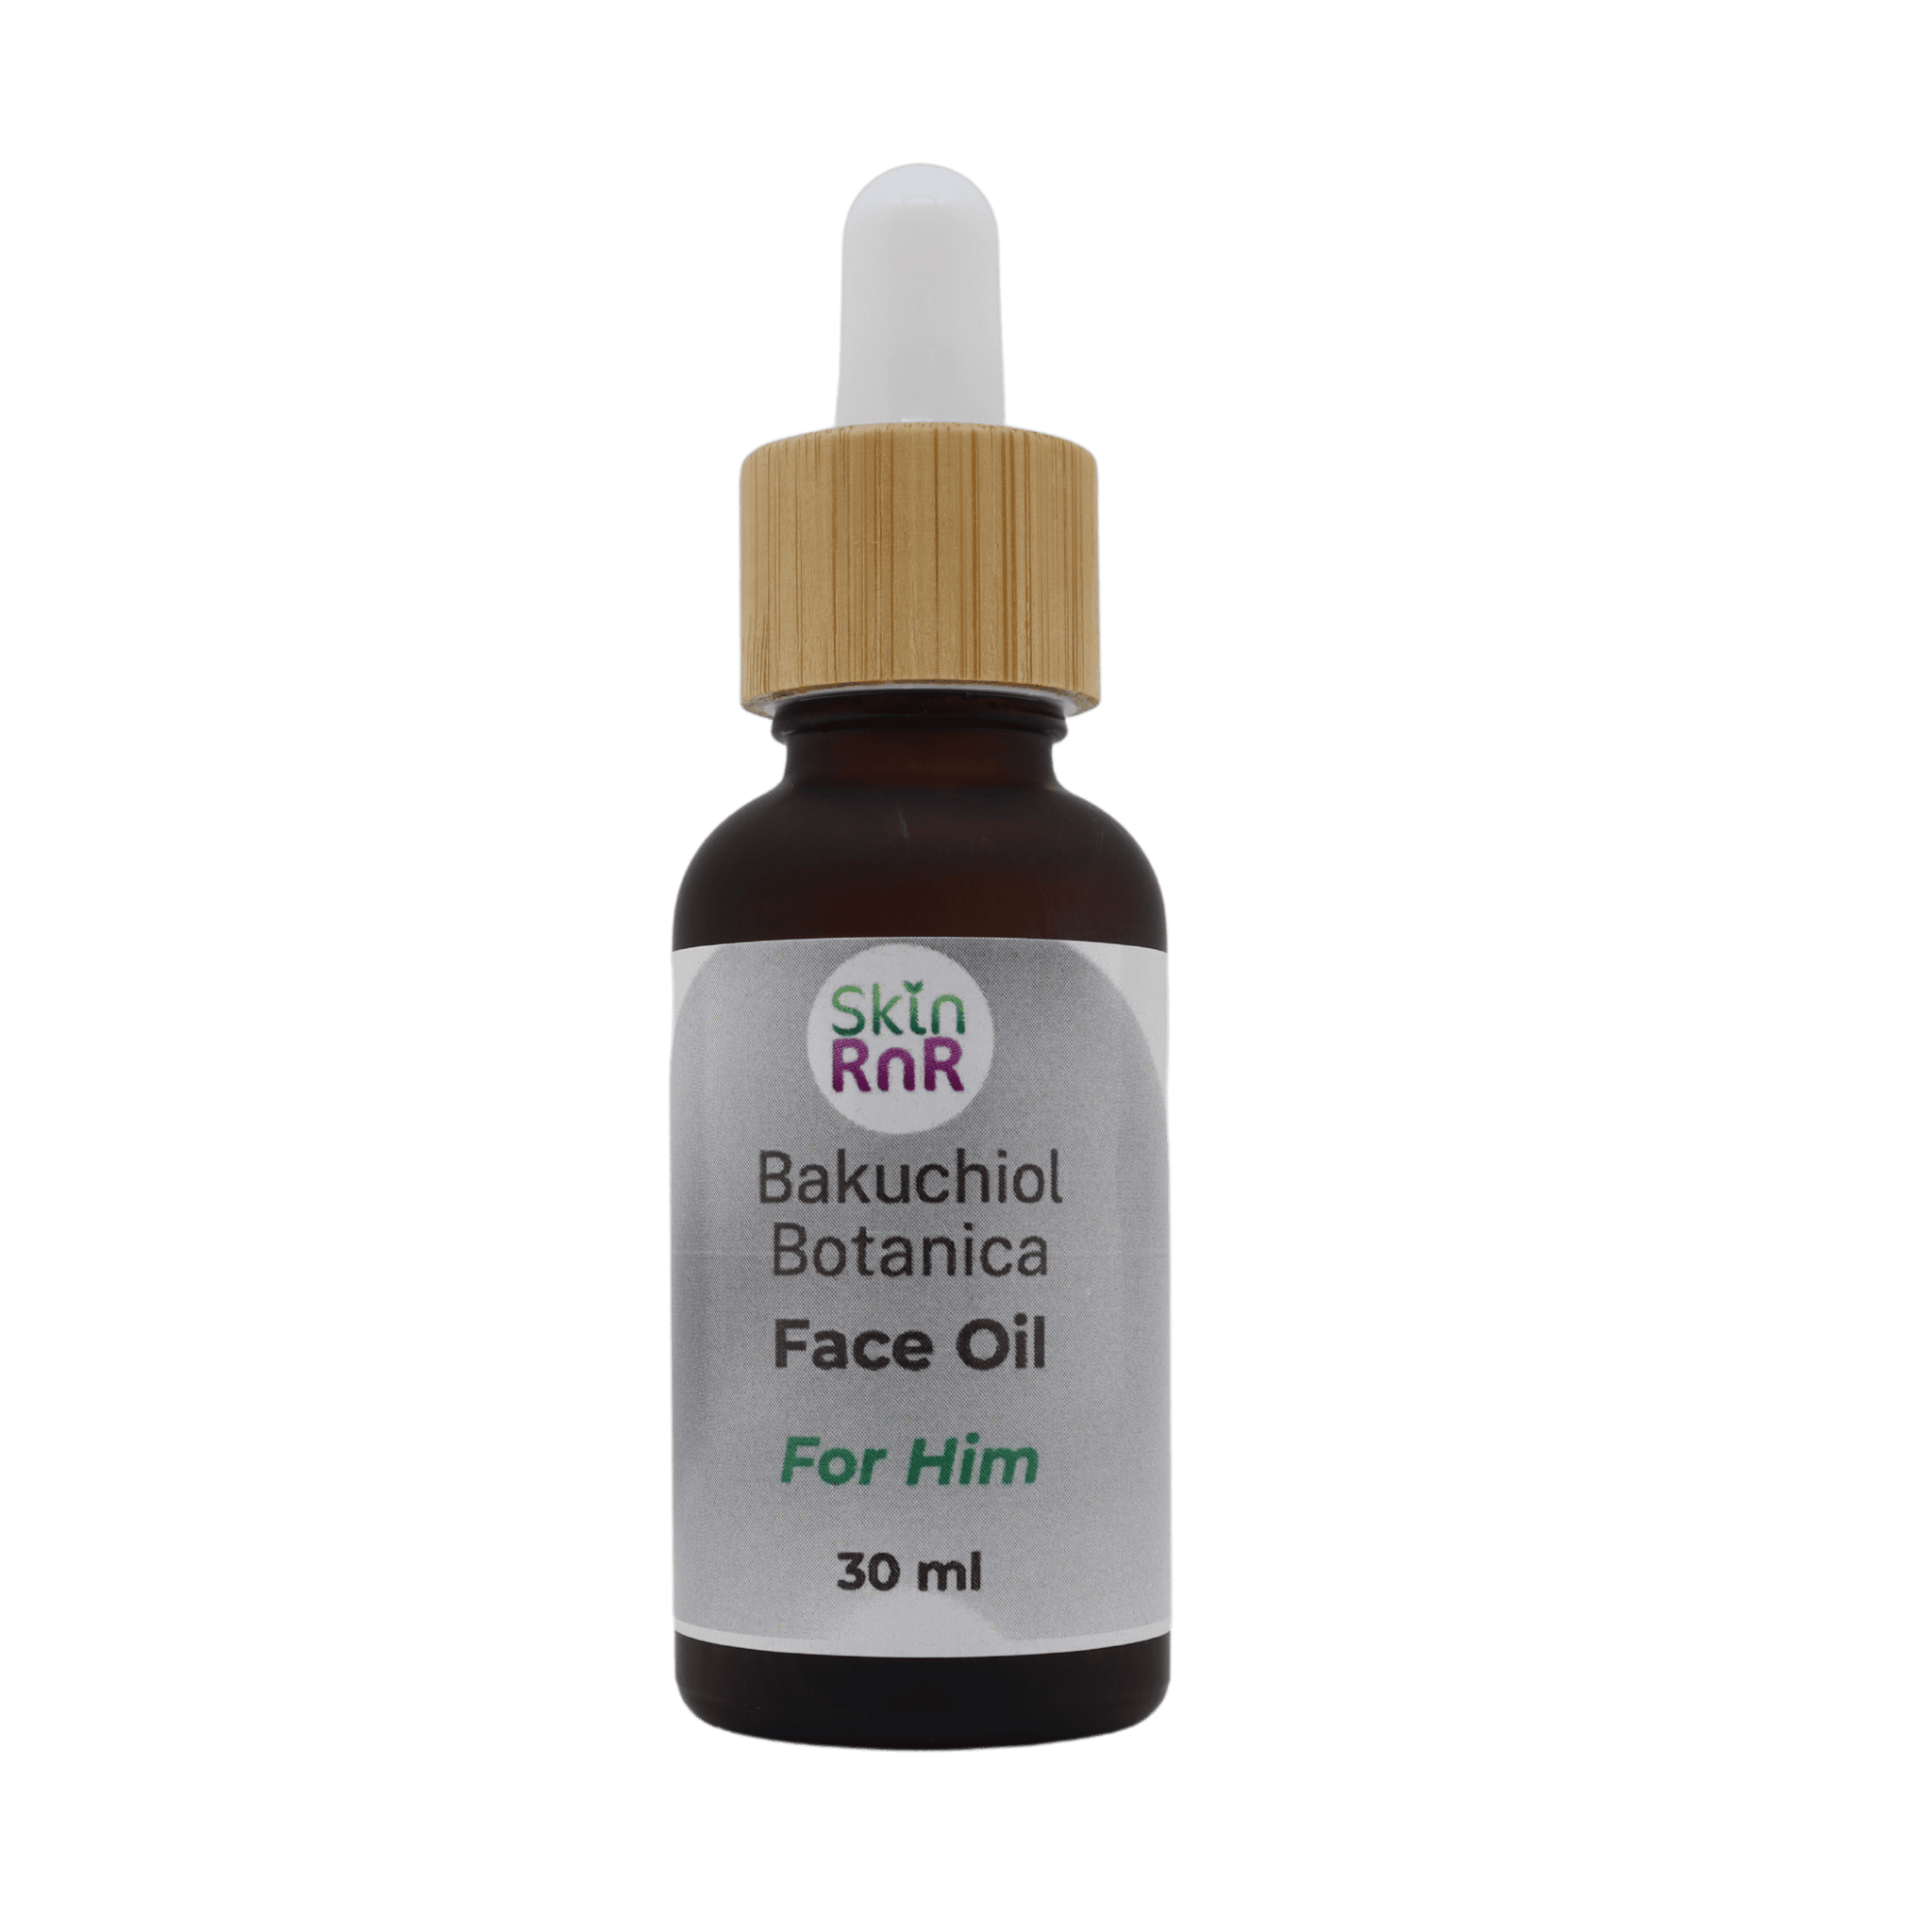 Bakuchiol Botanica Face Oil - For Him - 30 ml